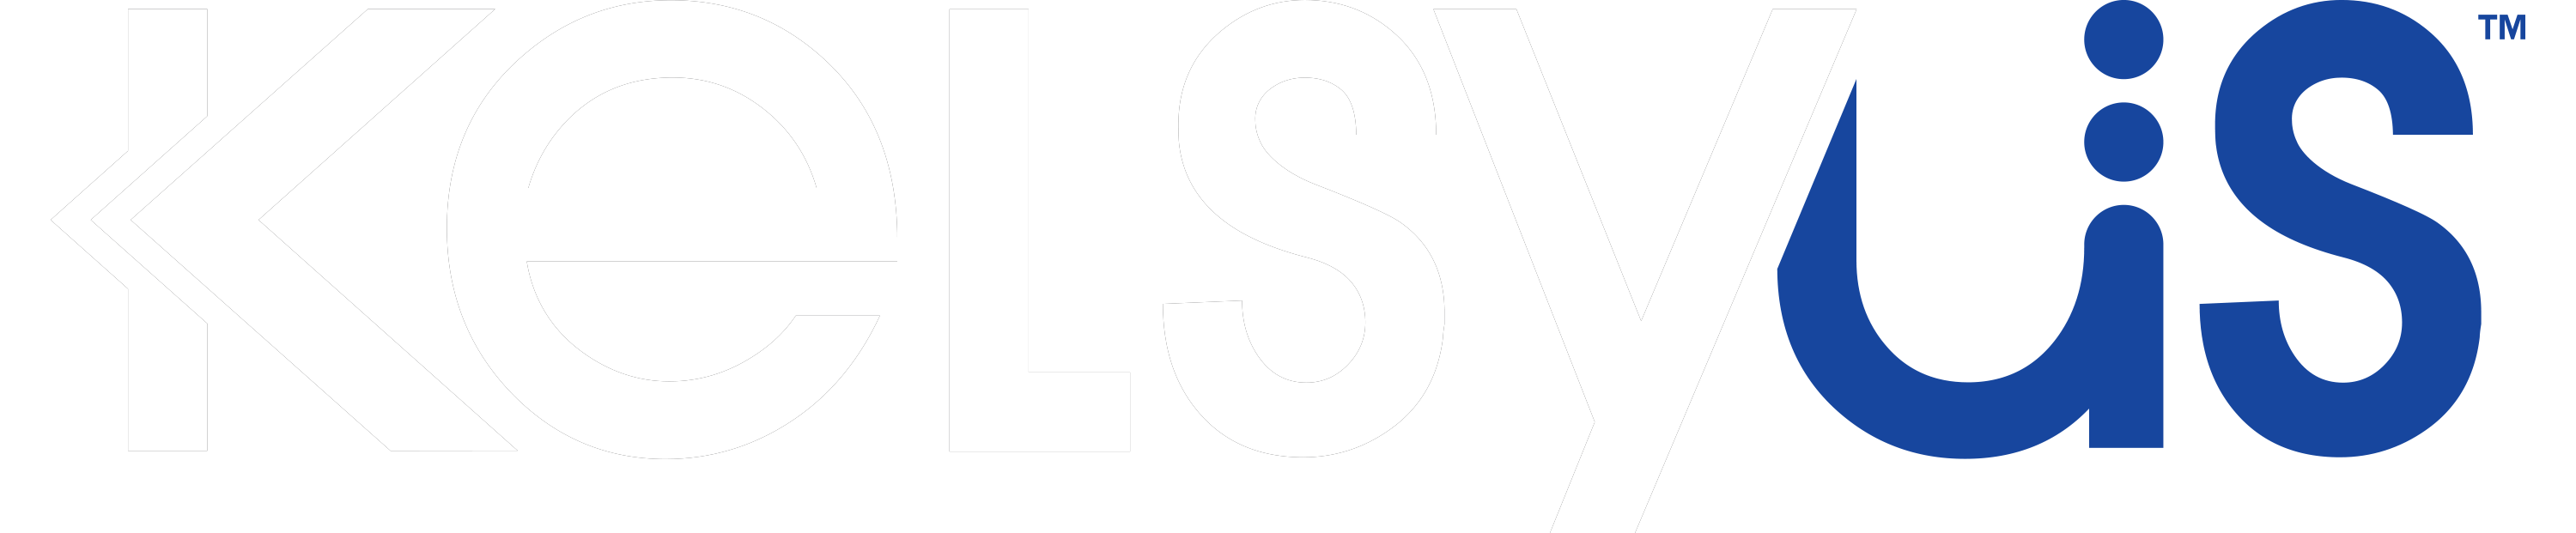 Kelsyus logo in white and blue
